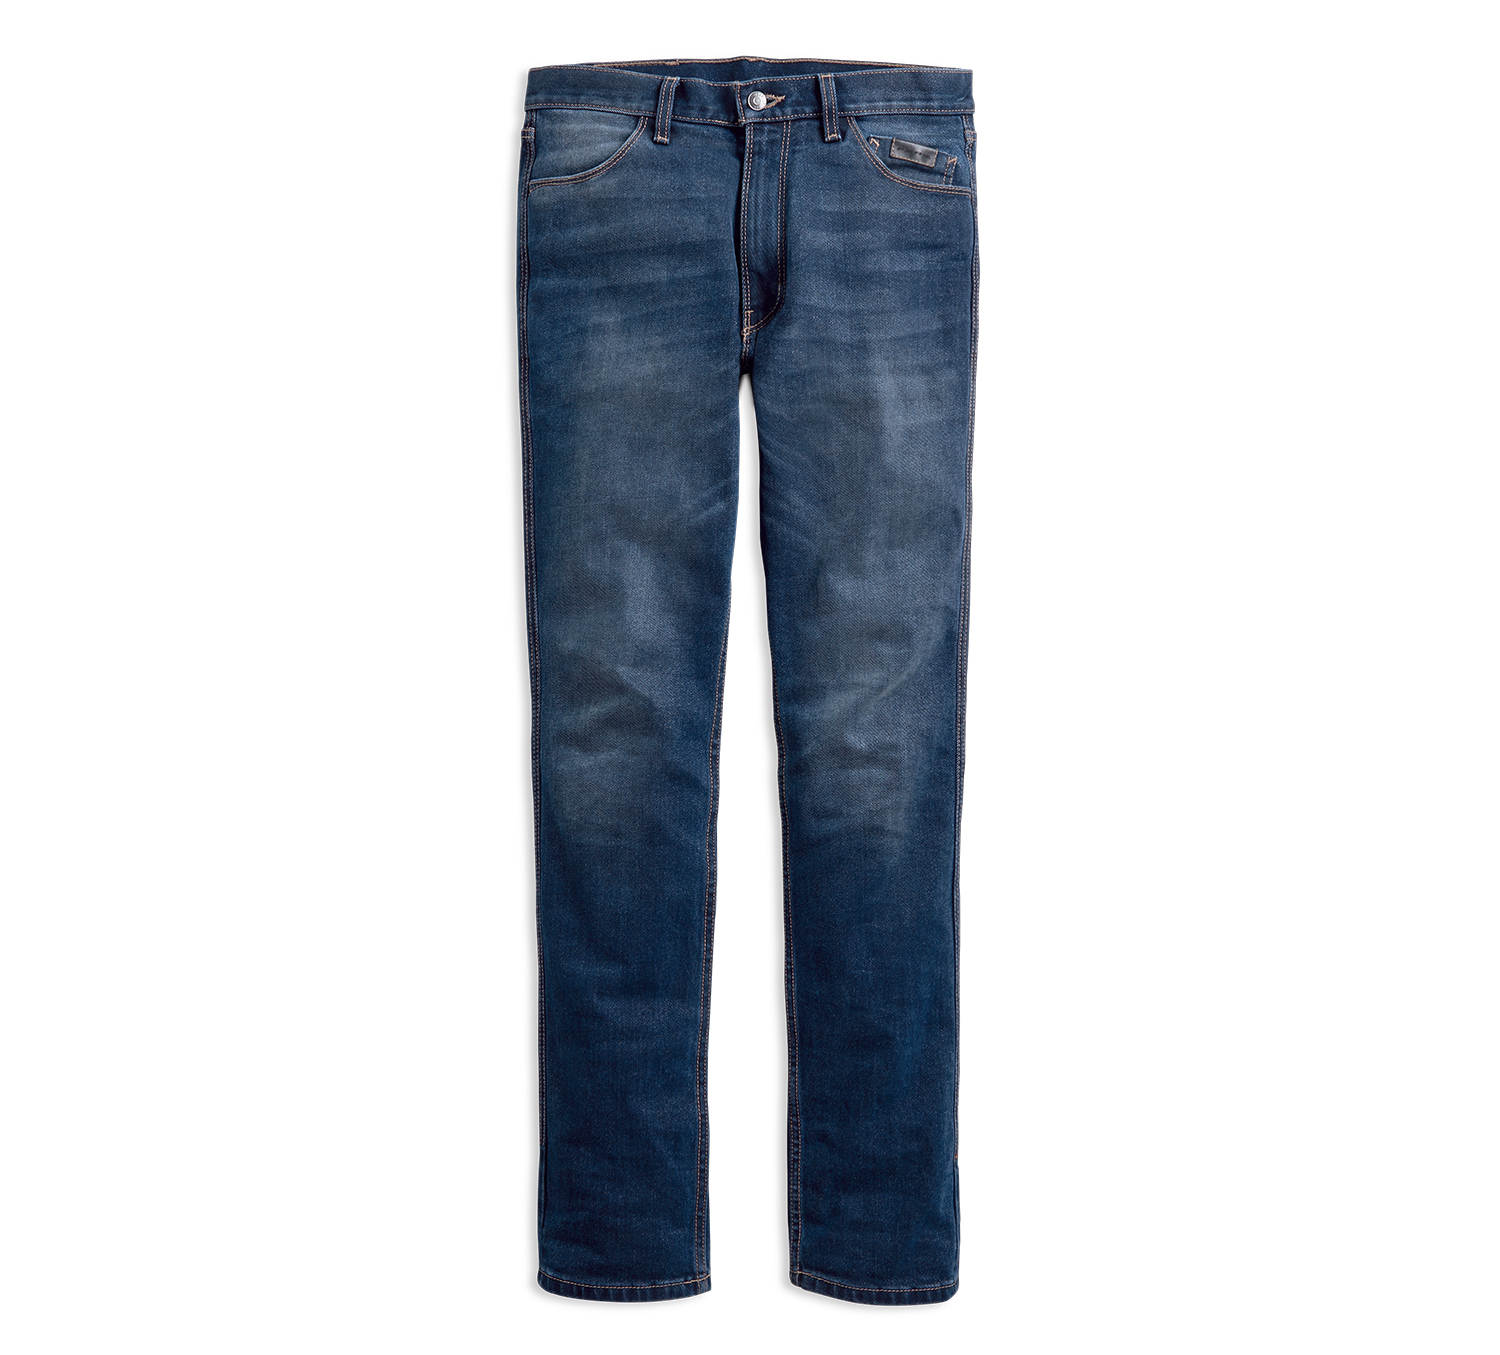 Men’s FXRG Armalith Denim Jeans